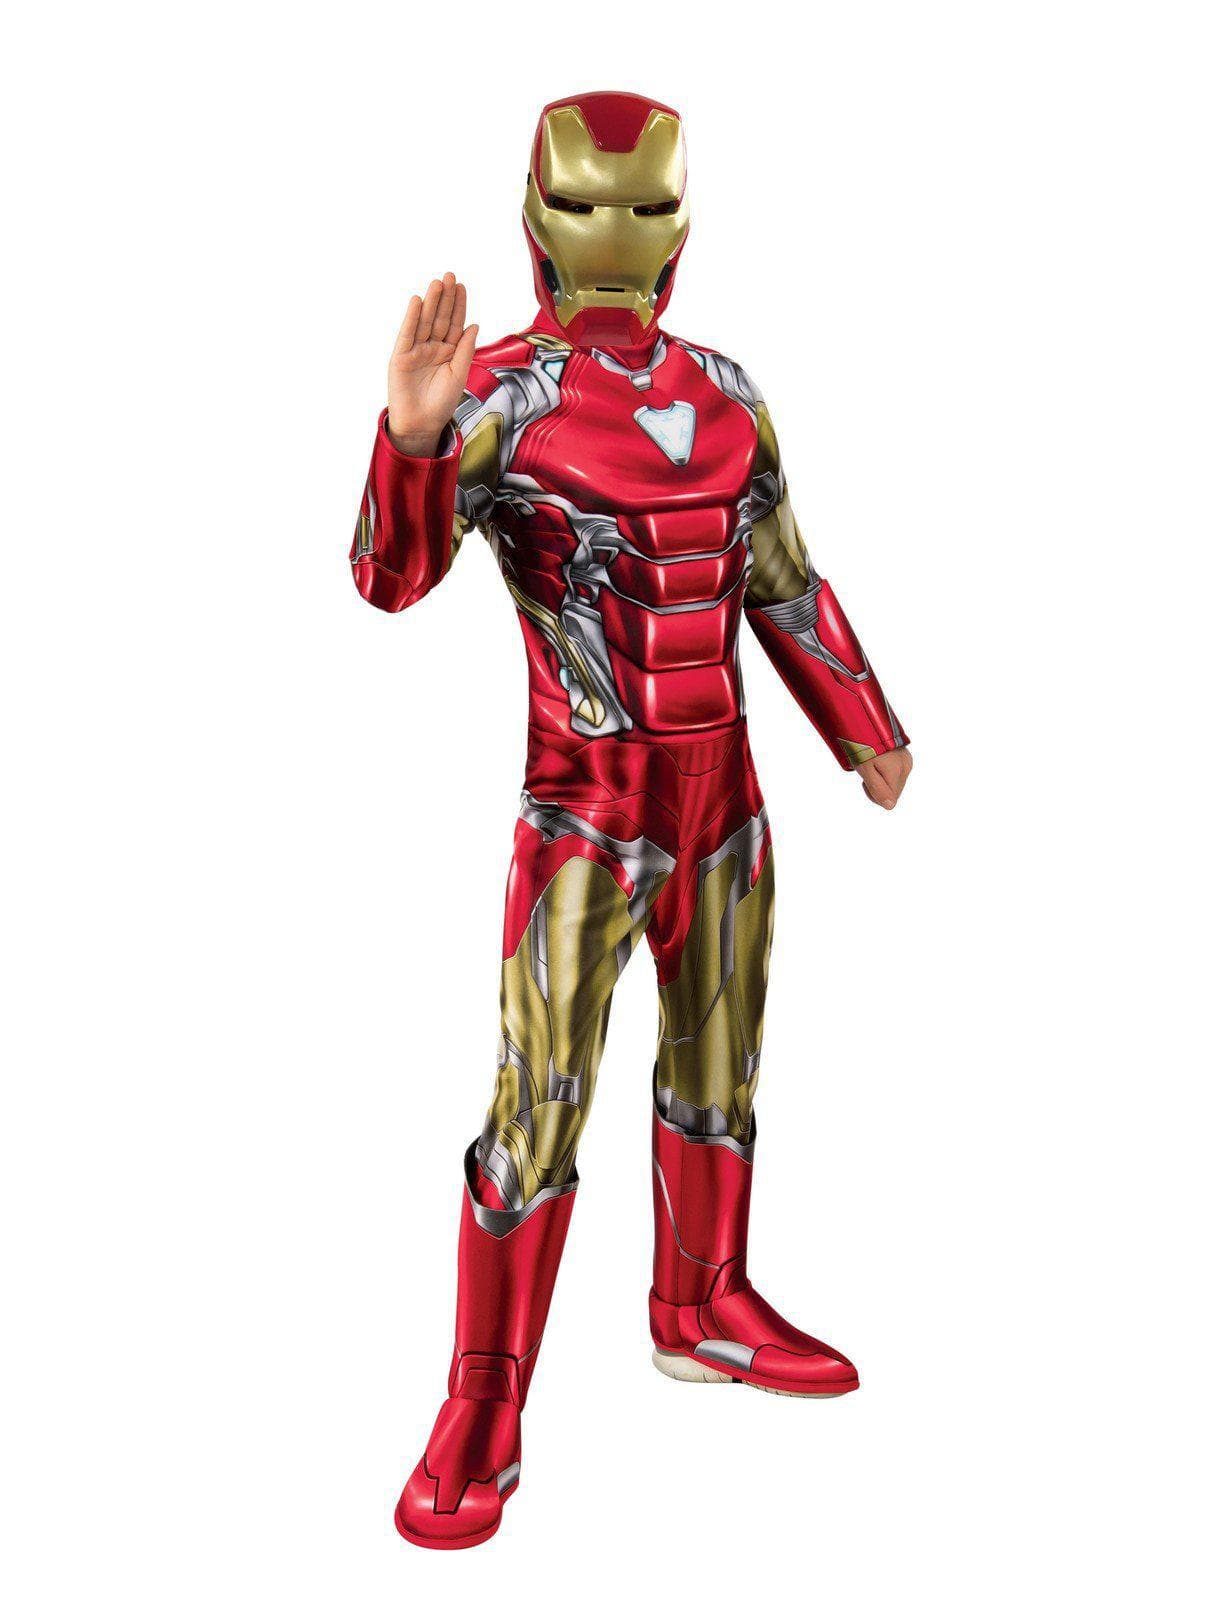 Kids Avengers Iron Man Deluxe Costume - costumes.com